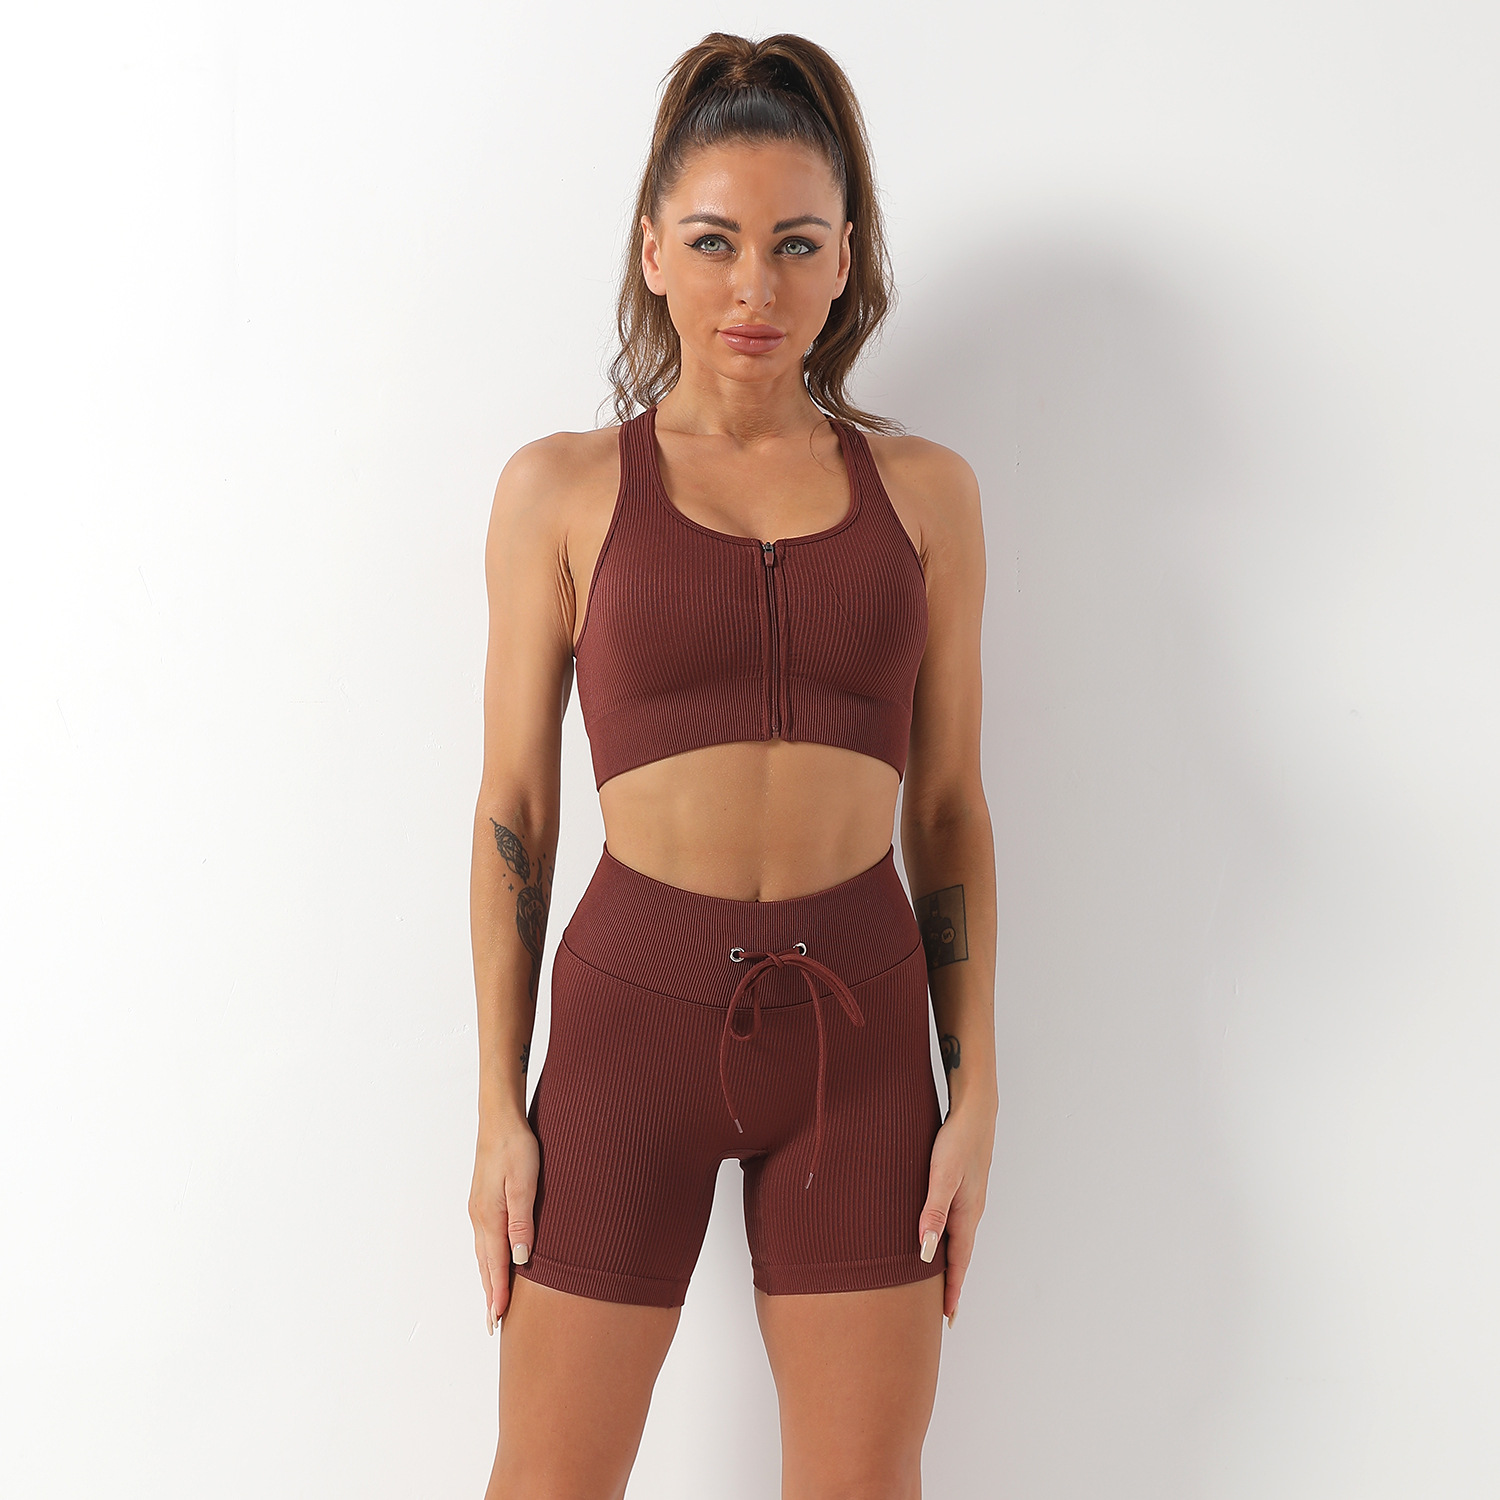 Threaded Seamless Yoga Suit Zipper Sports Top Workout Yoga Vest Lulu Yoga Pants Cycling Shorts